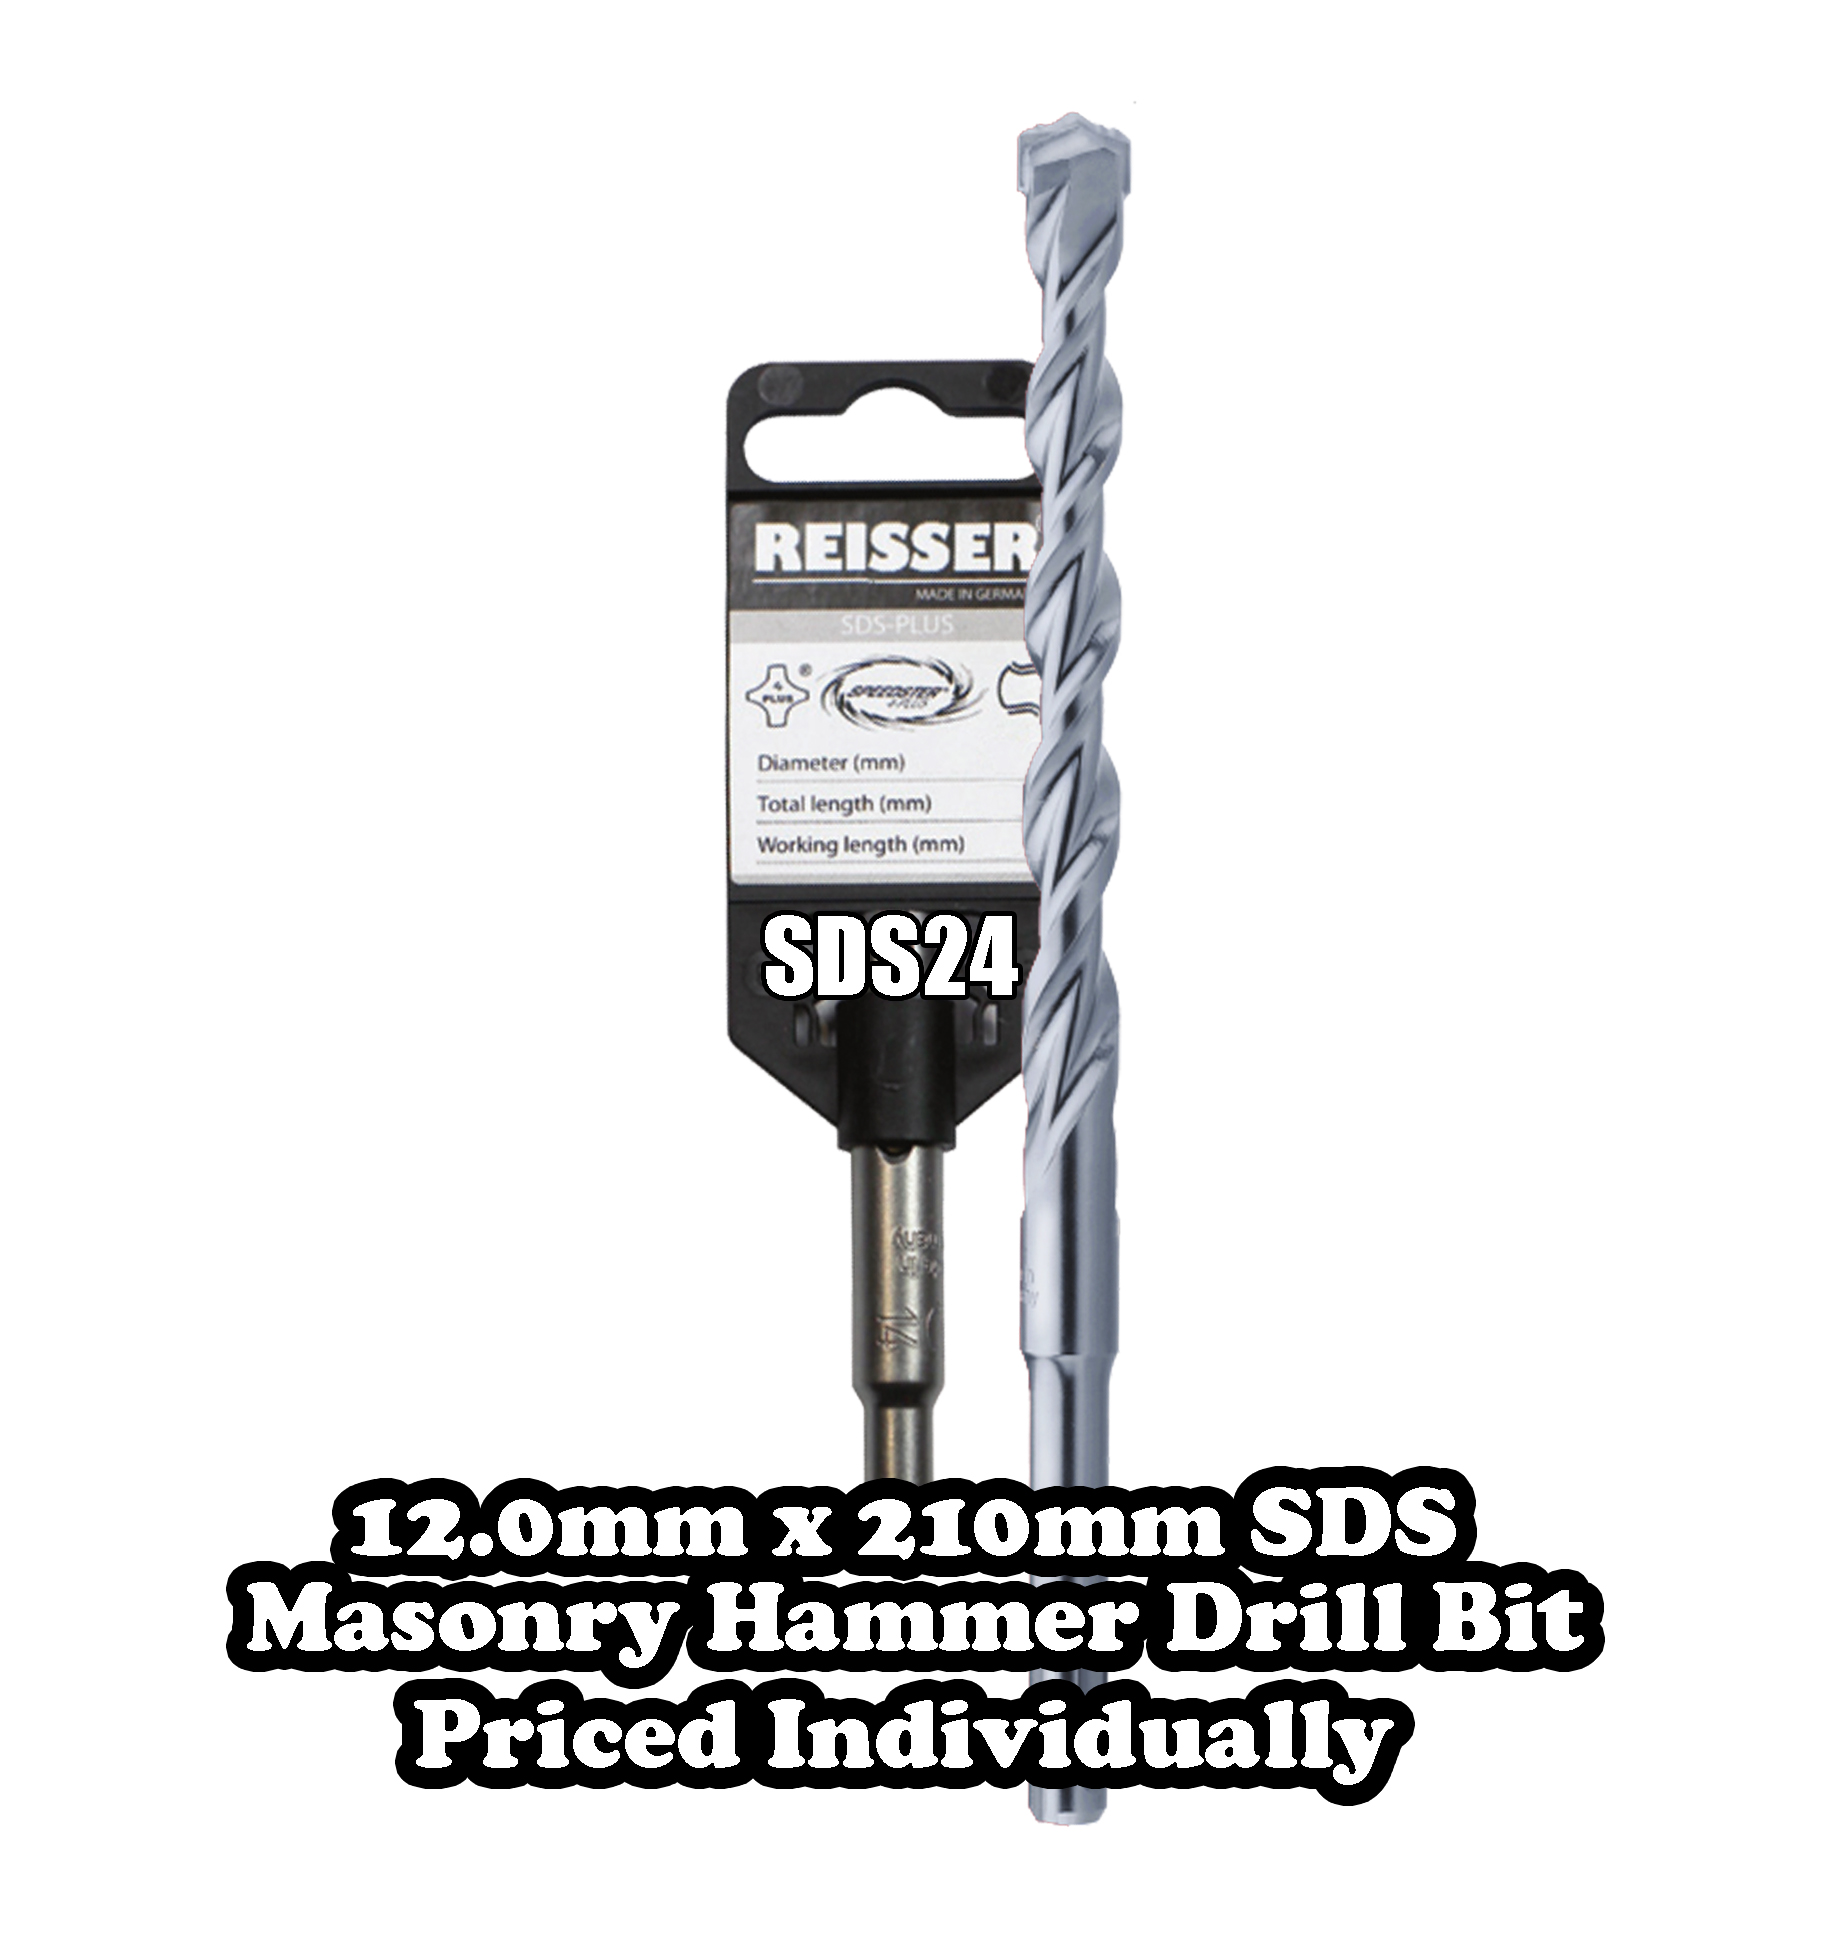 NEW PRICE 10mm x 210mm SDS Masonry Hammer Drill Bit